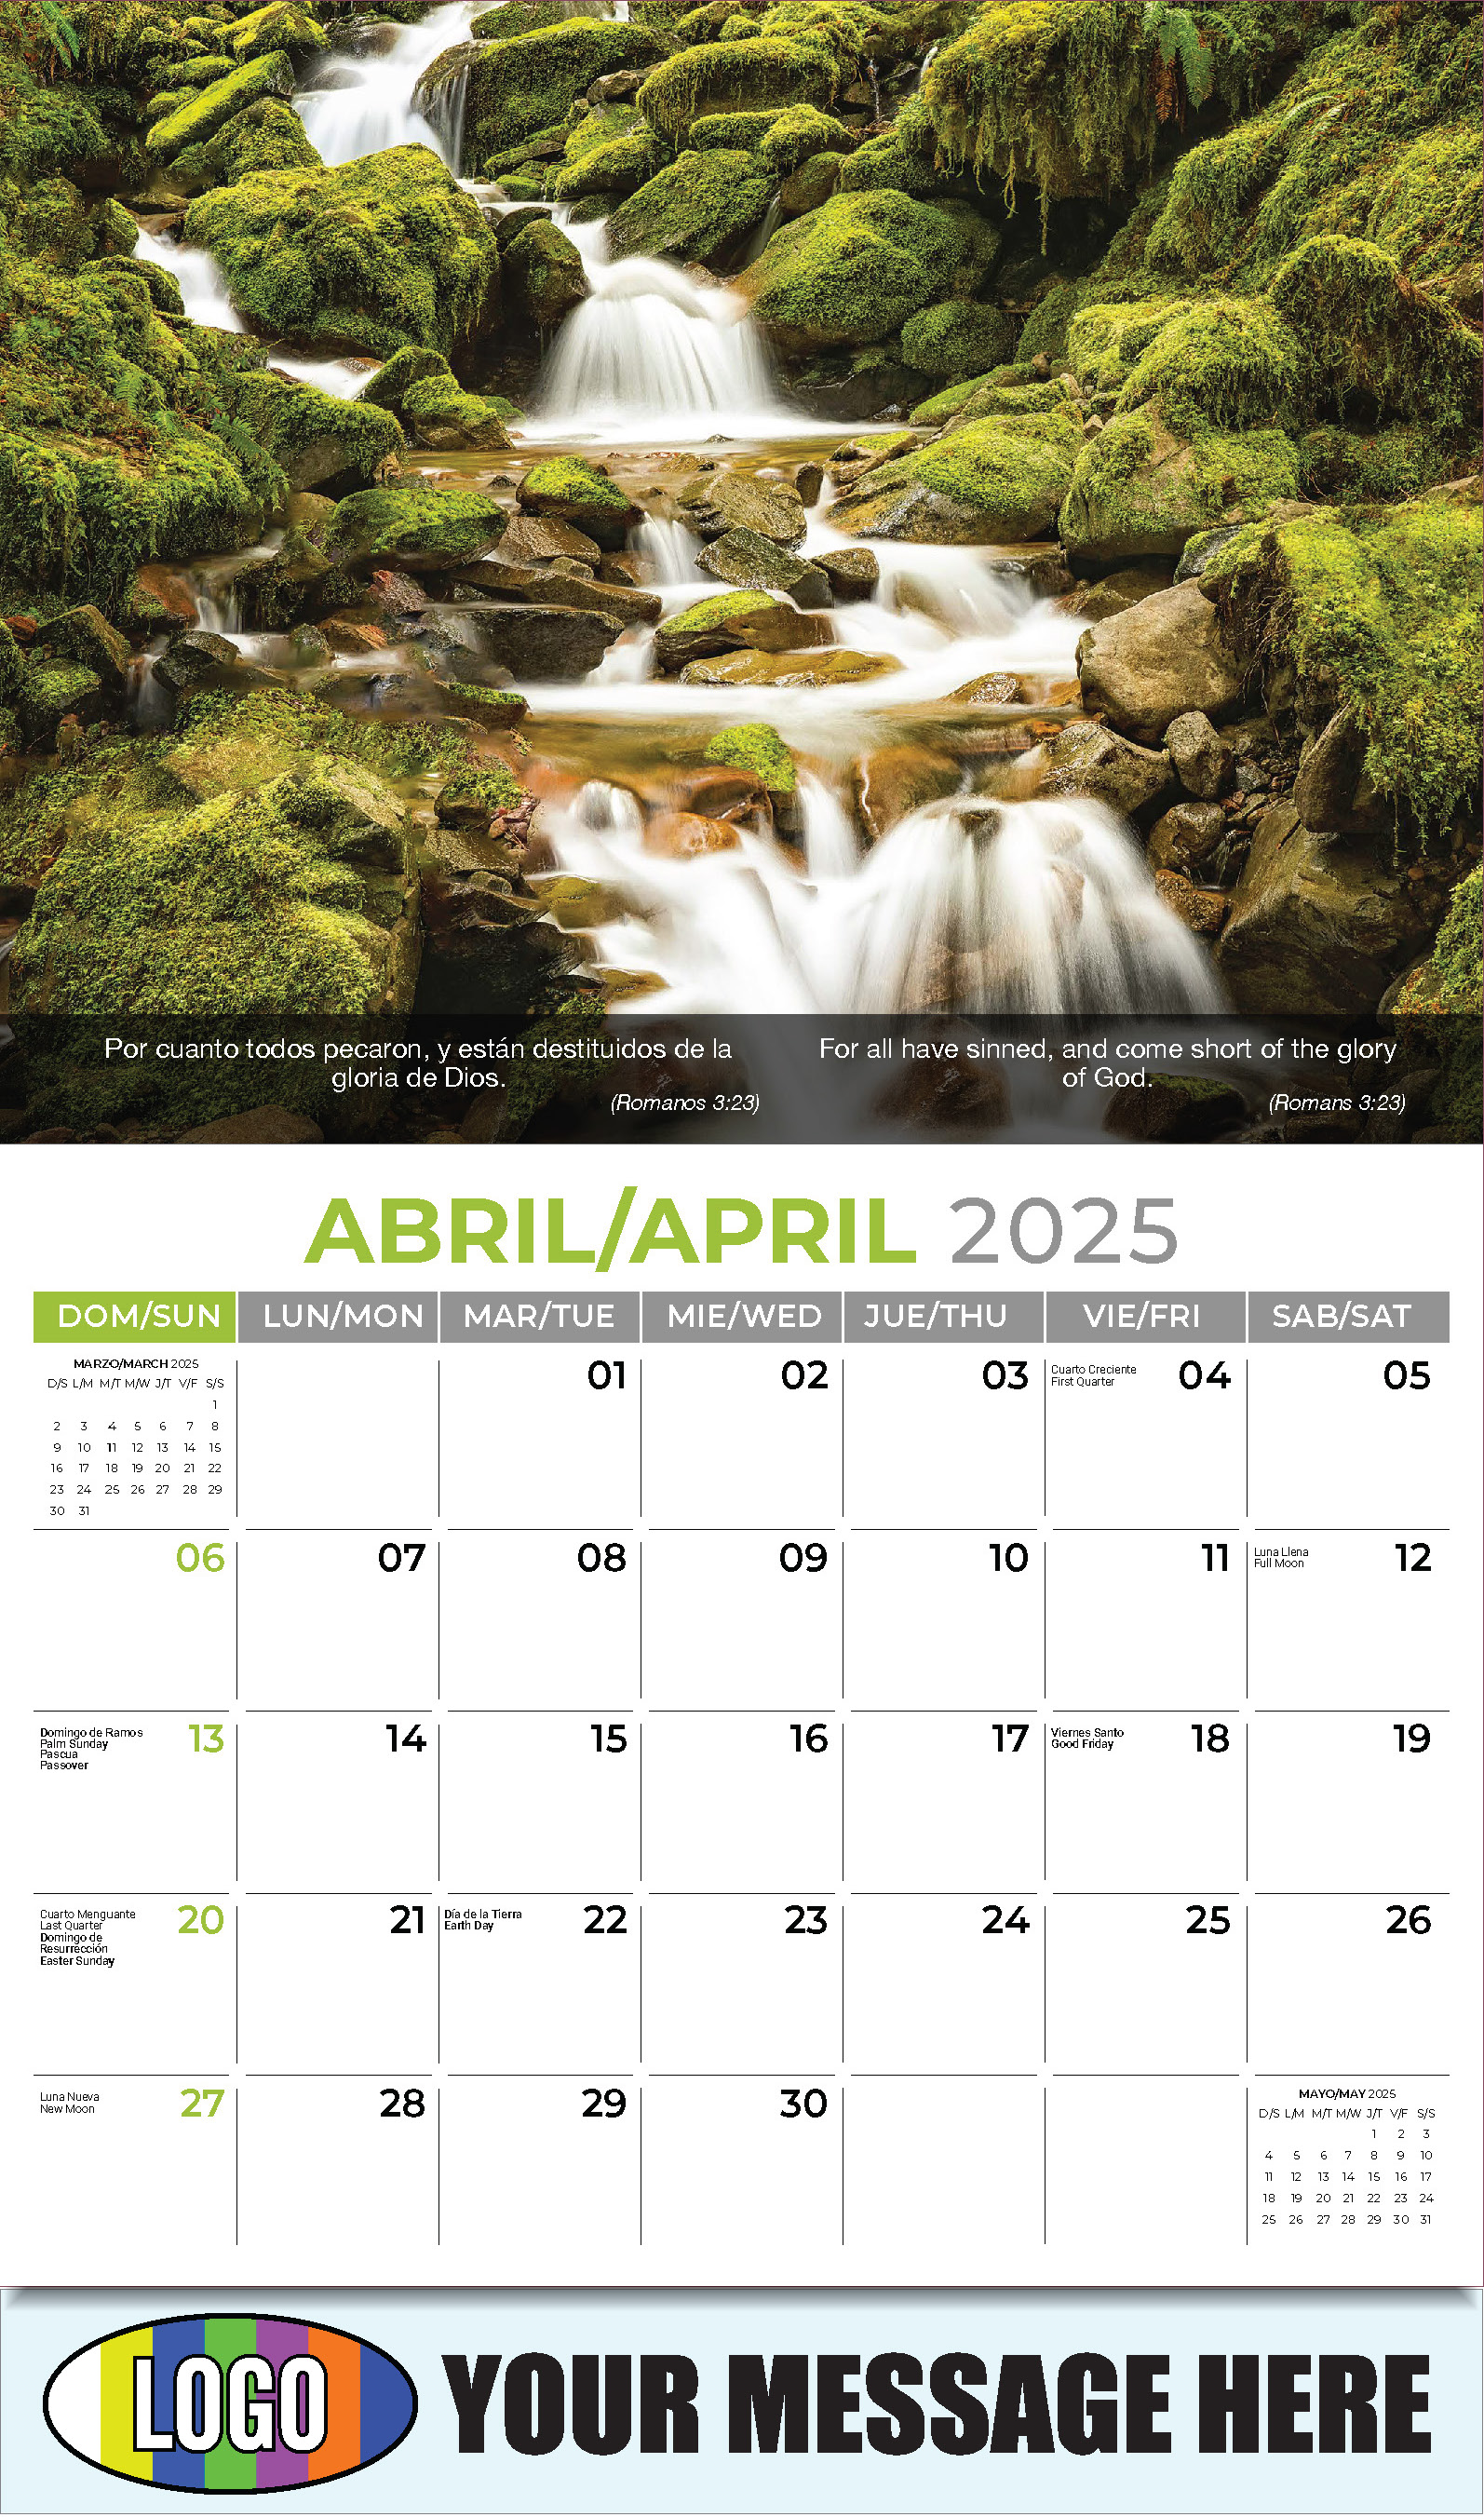 Faith Passages Bilingual 2025 Christian Business Advertising Calendar - April